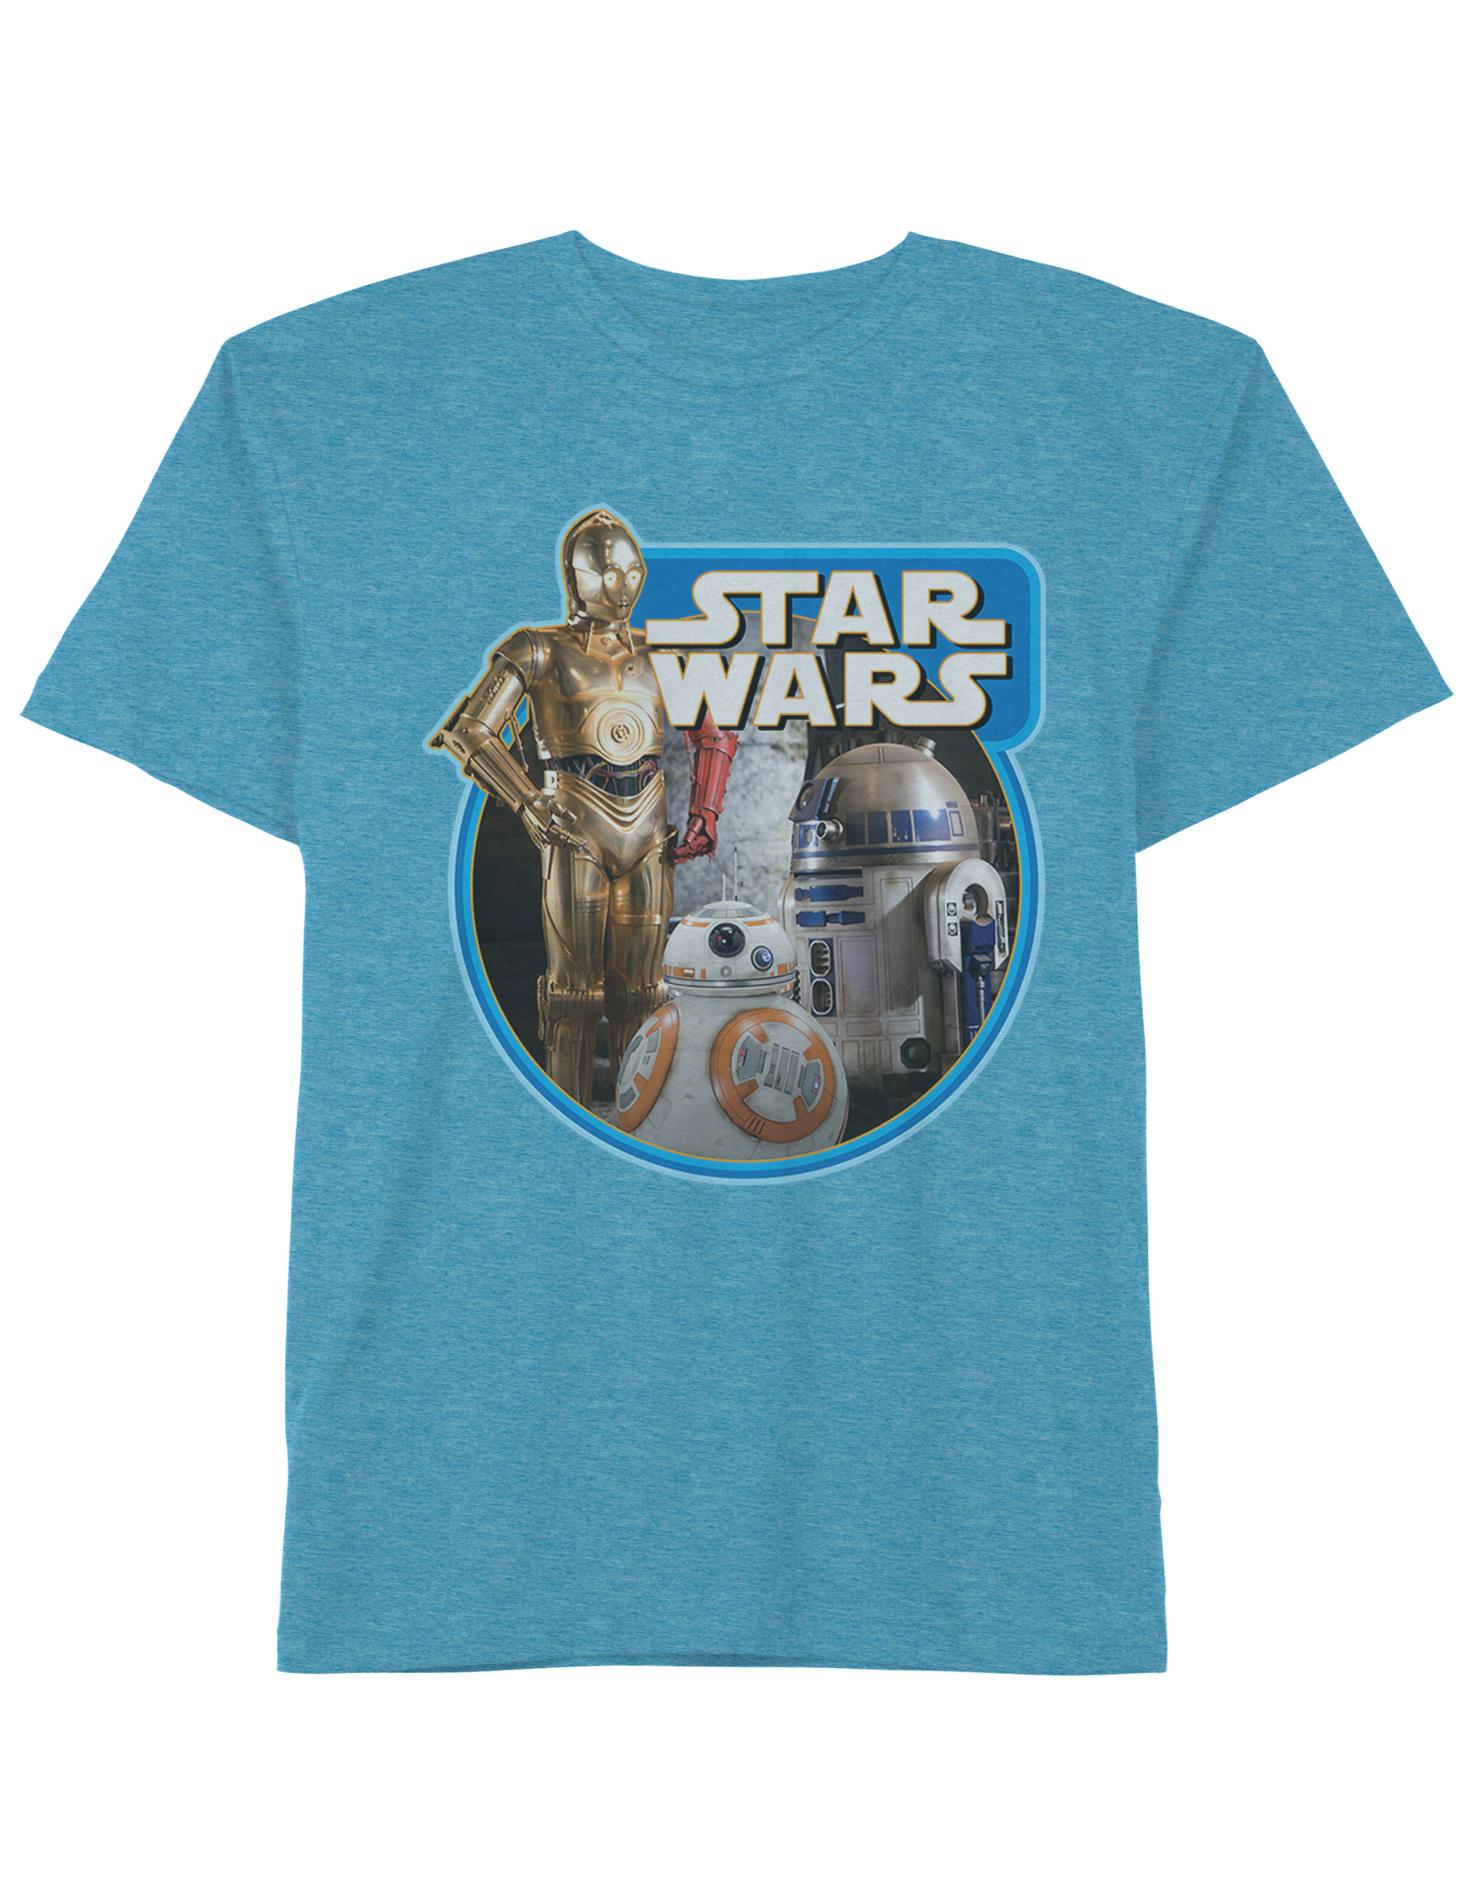 Star Wars Boy's Graphic T-Shirt - Droids